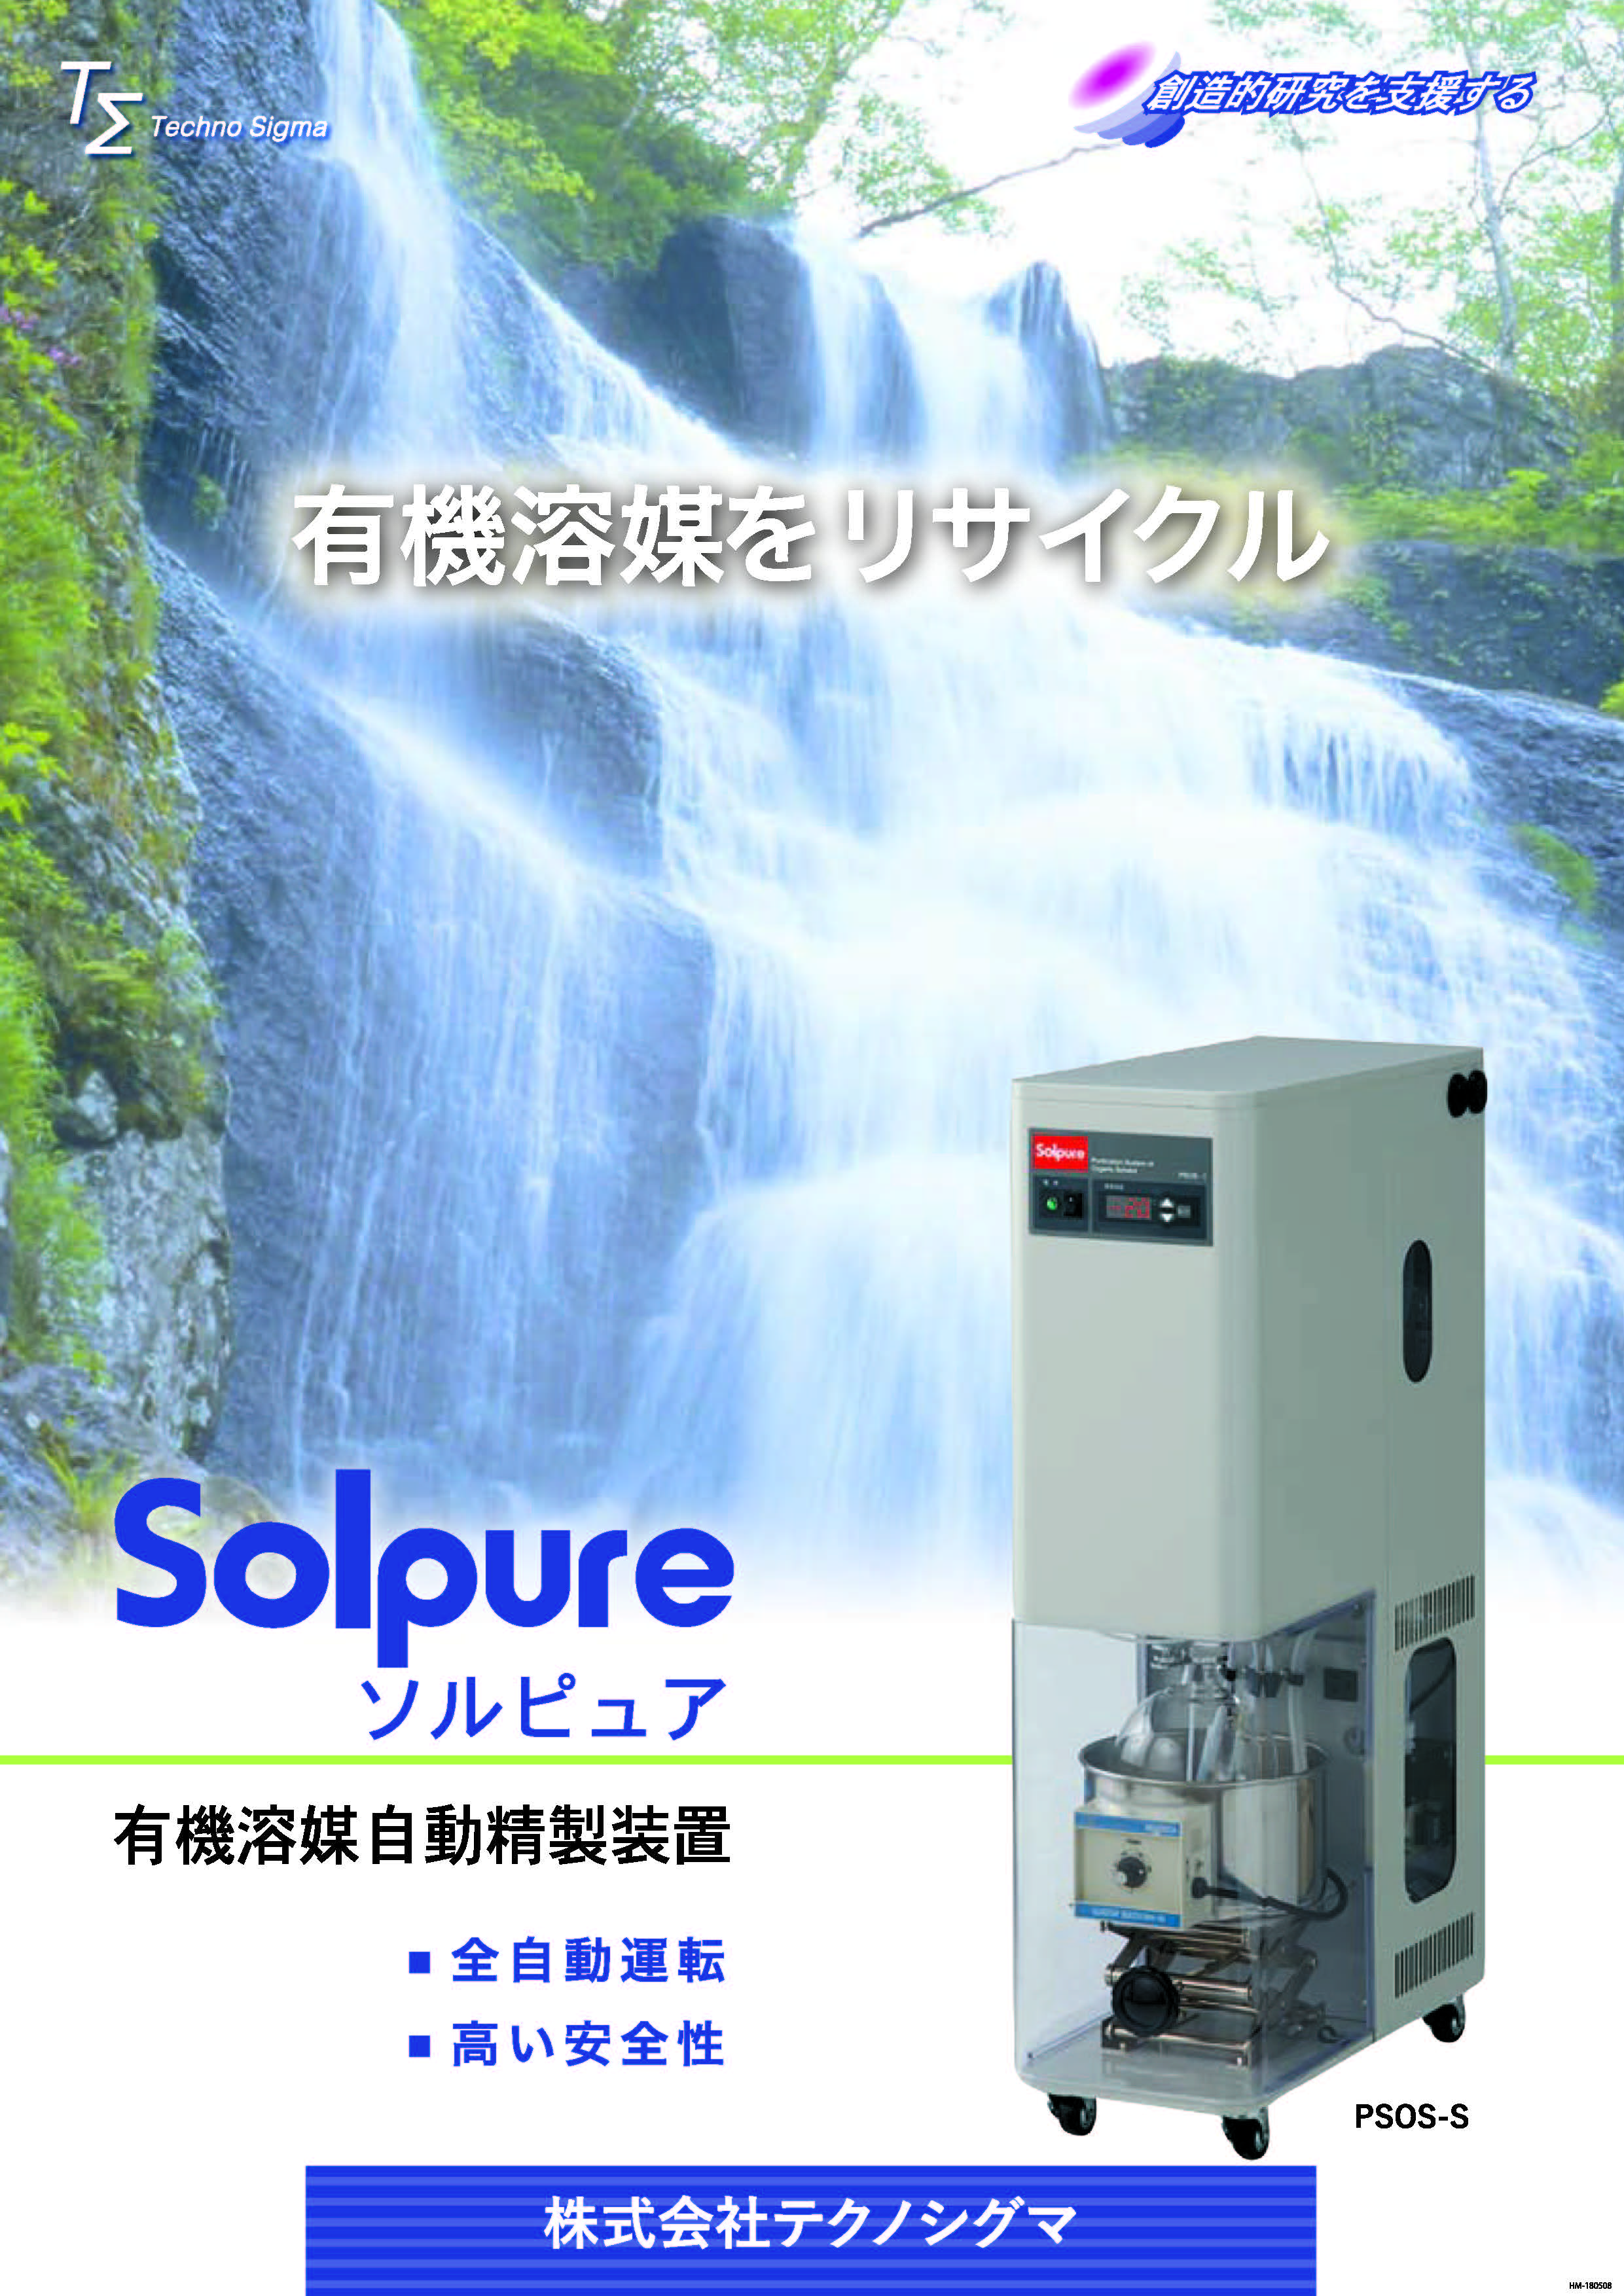 Solpure、ソルピュア、溶剤回収装置、溶媒精製装置